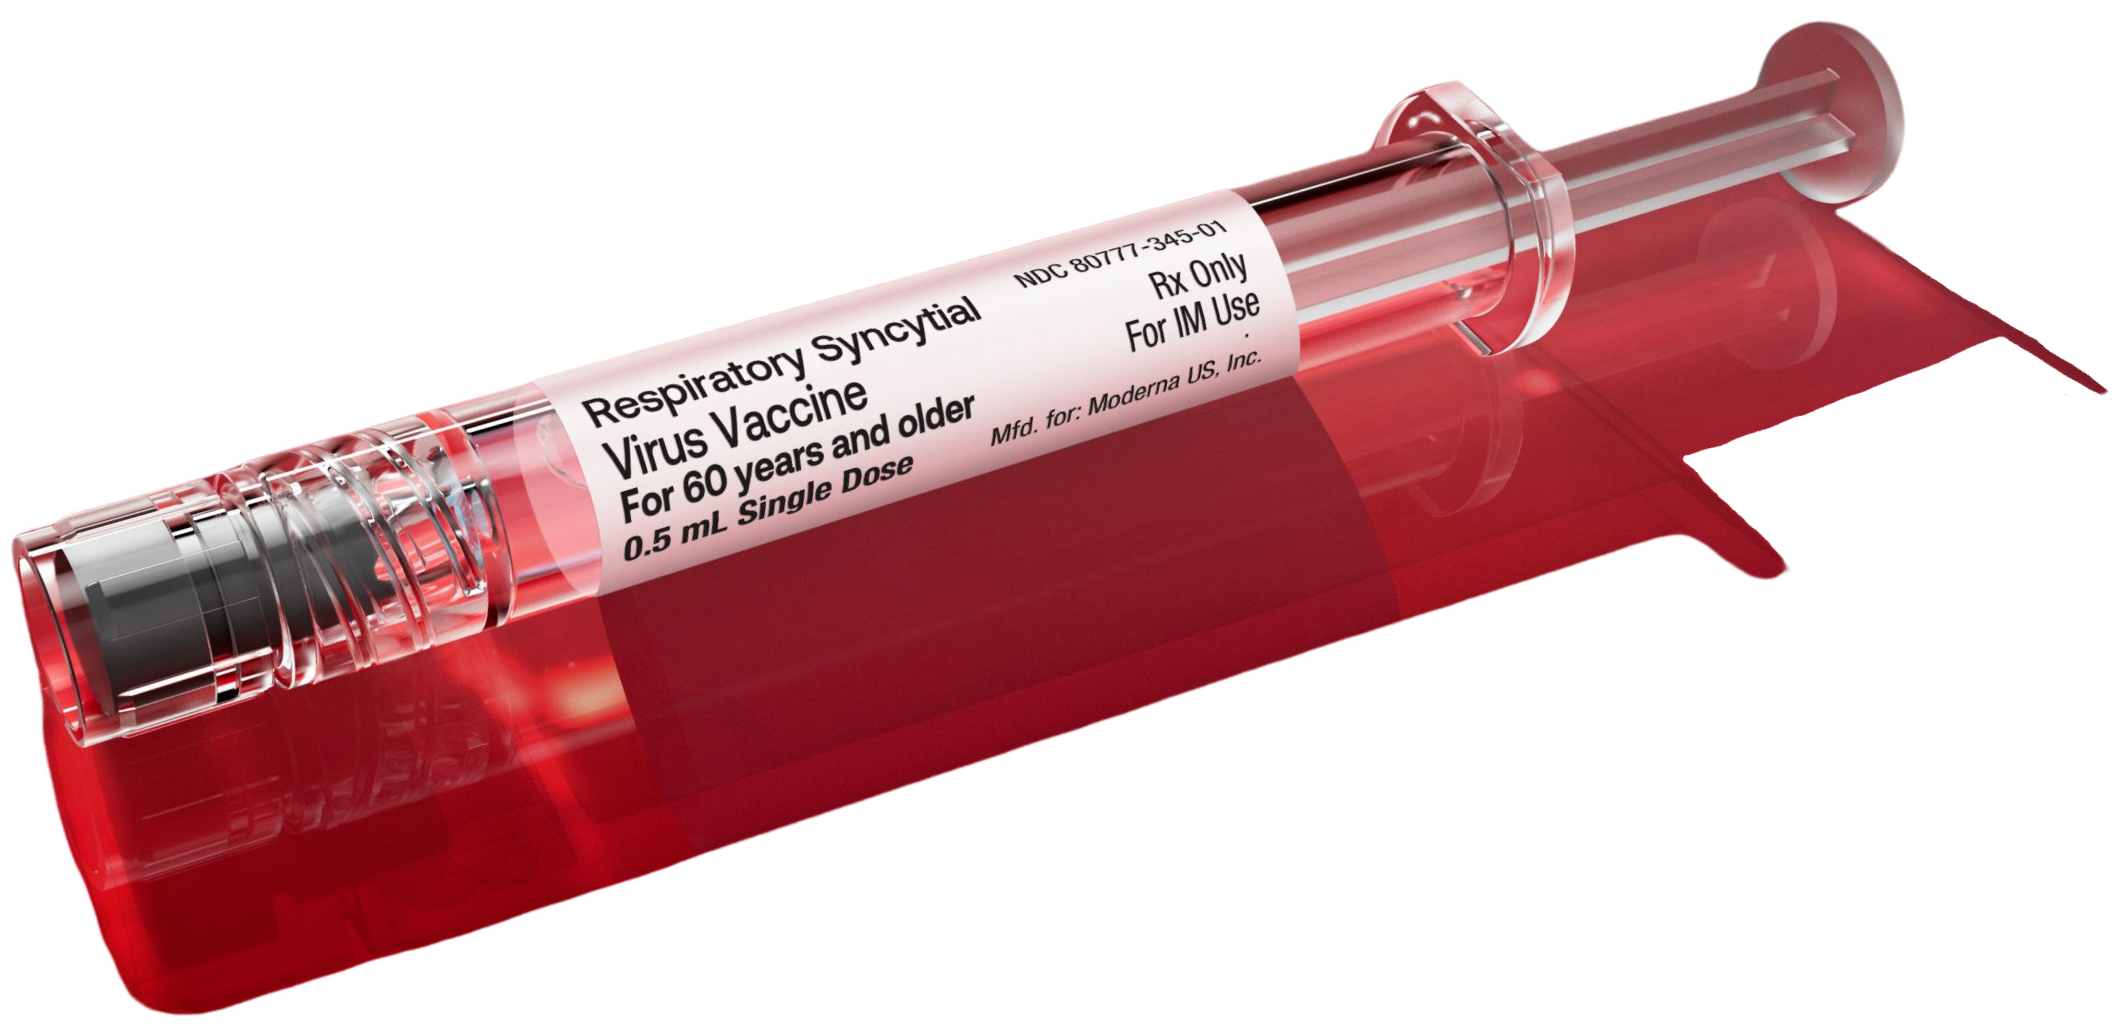 mRESVIA RSV vaccine pre-filled syringe